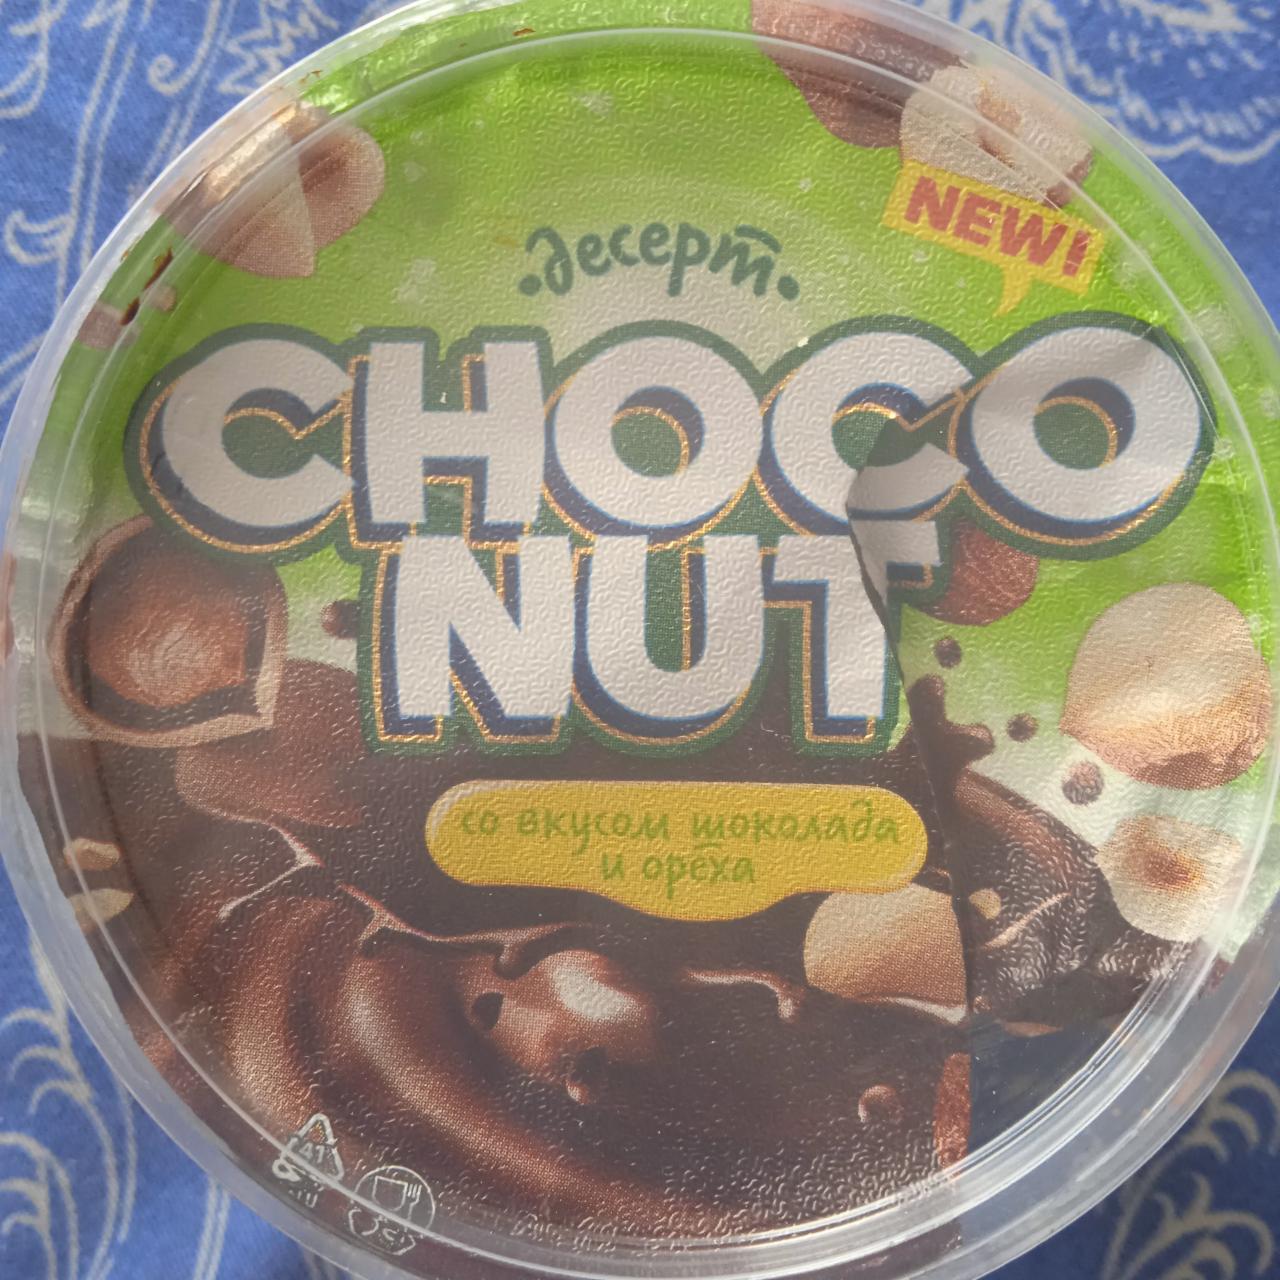 Фото - Десерт со вкусом шоколада и ореха Choco nut